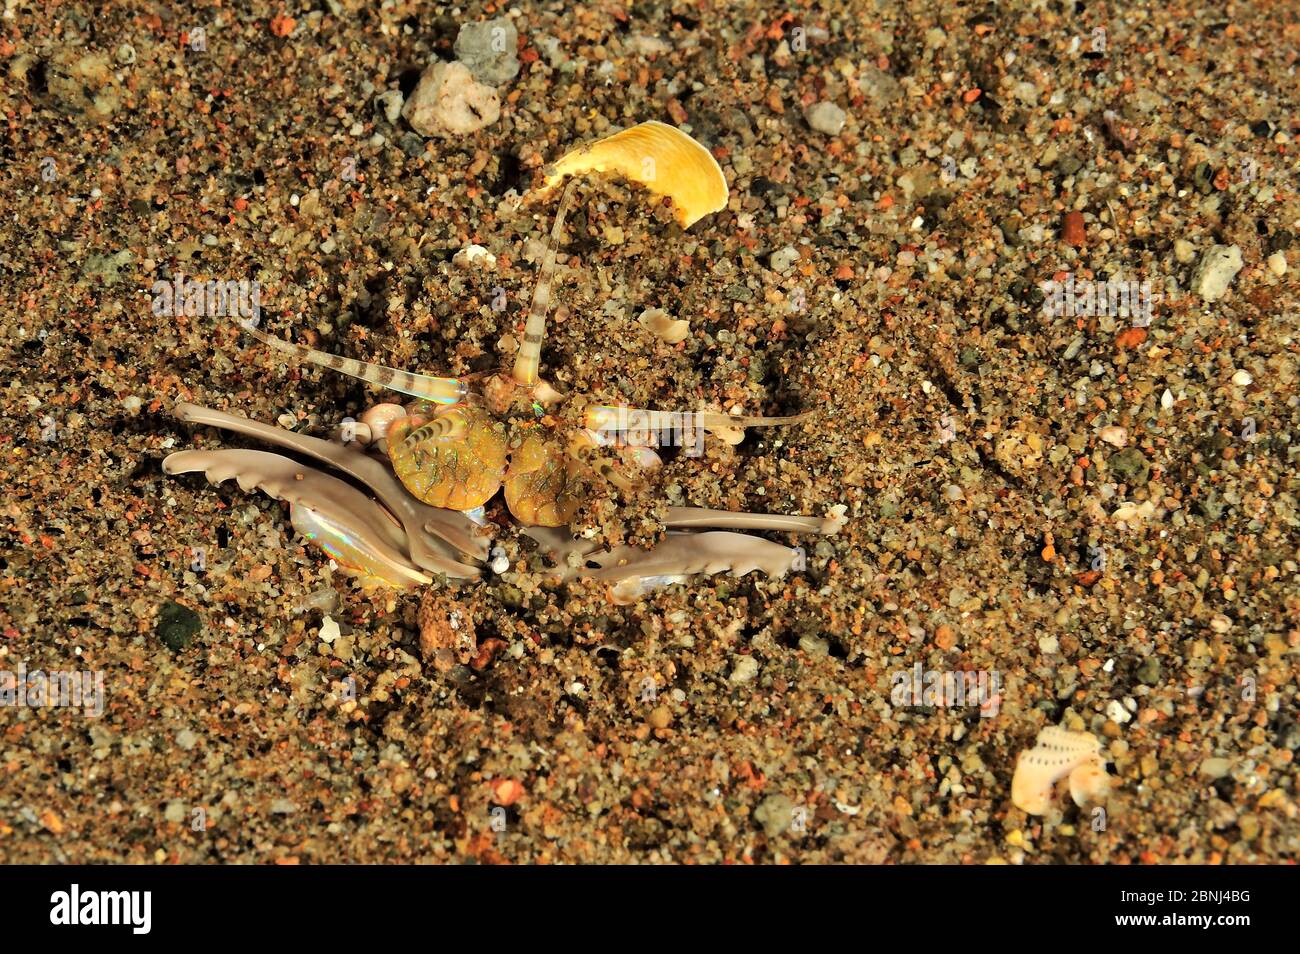 Bobbit worm (Eunice aphroditois) half out burrow, Sulu Sea, Philippines Stock Photo